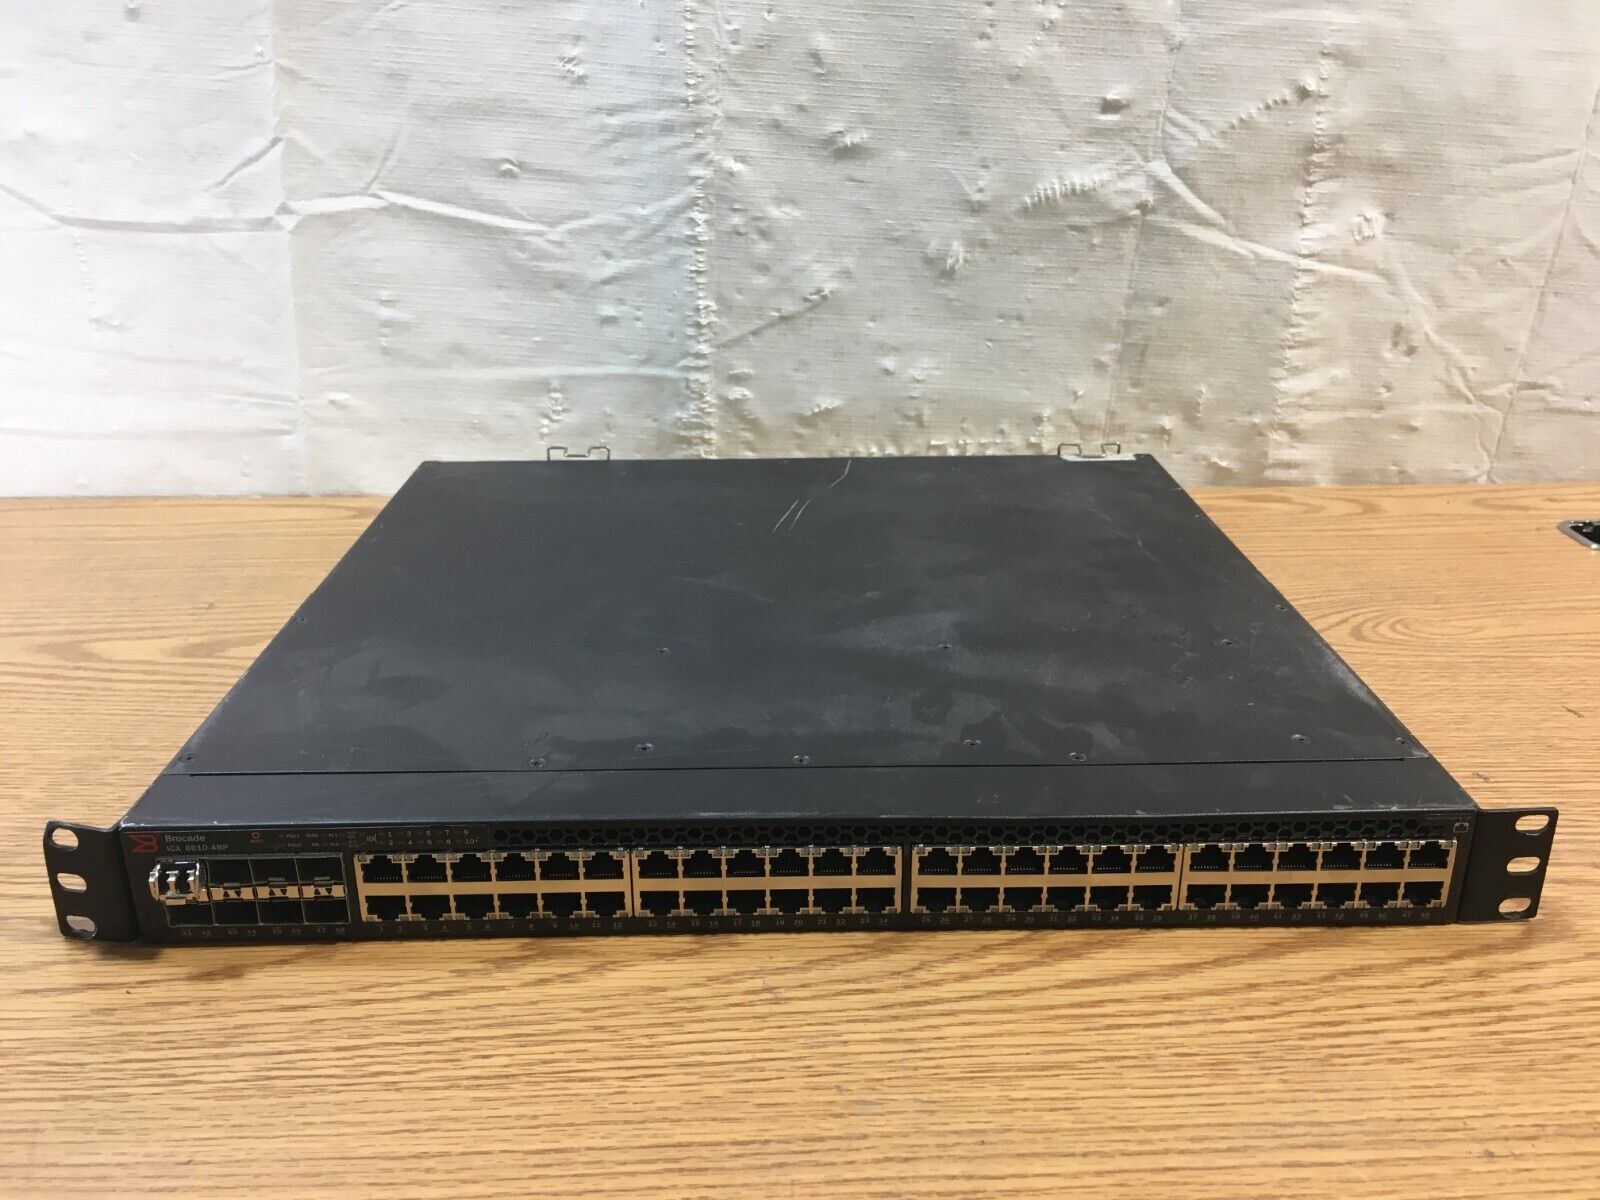 Brocade ICX6610-48-E 48-port Gigabit 8-port SFP Network Switch 2xPSU/2xFAN